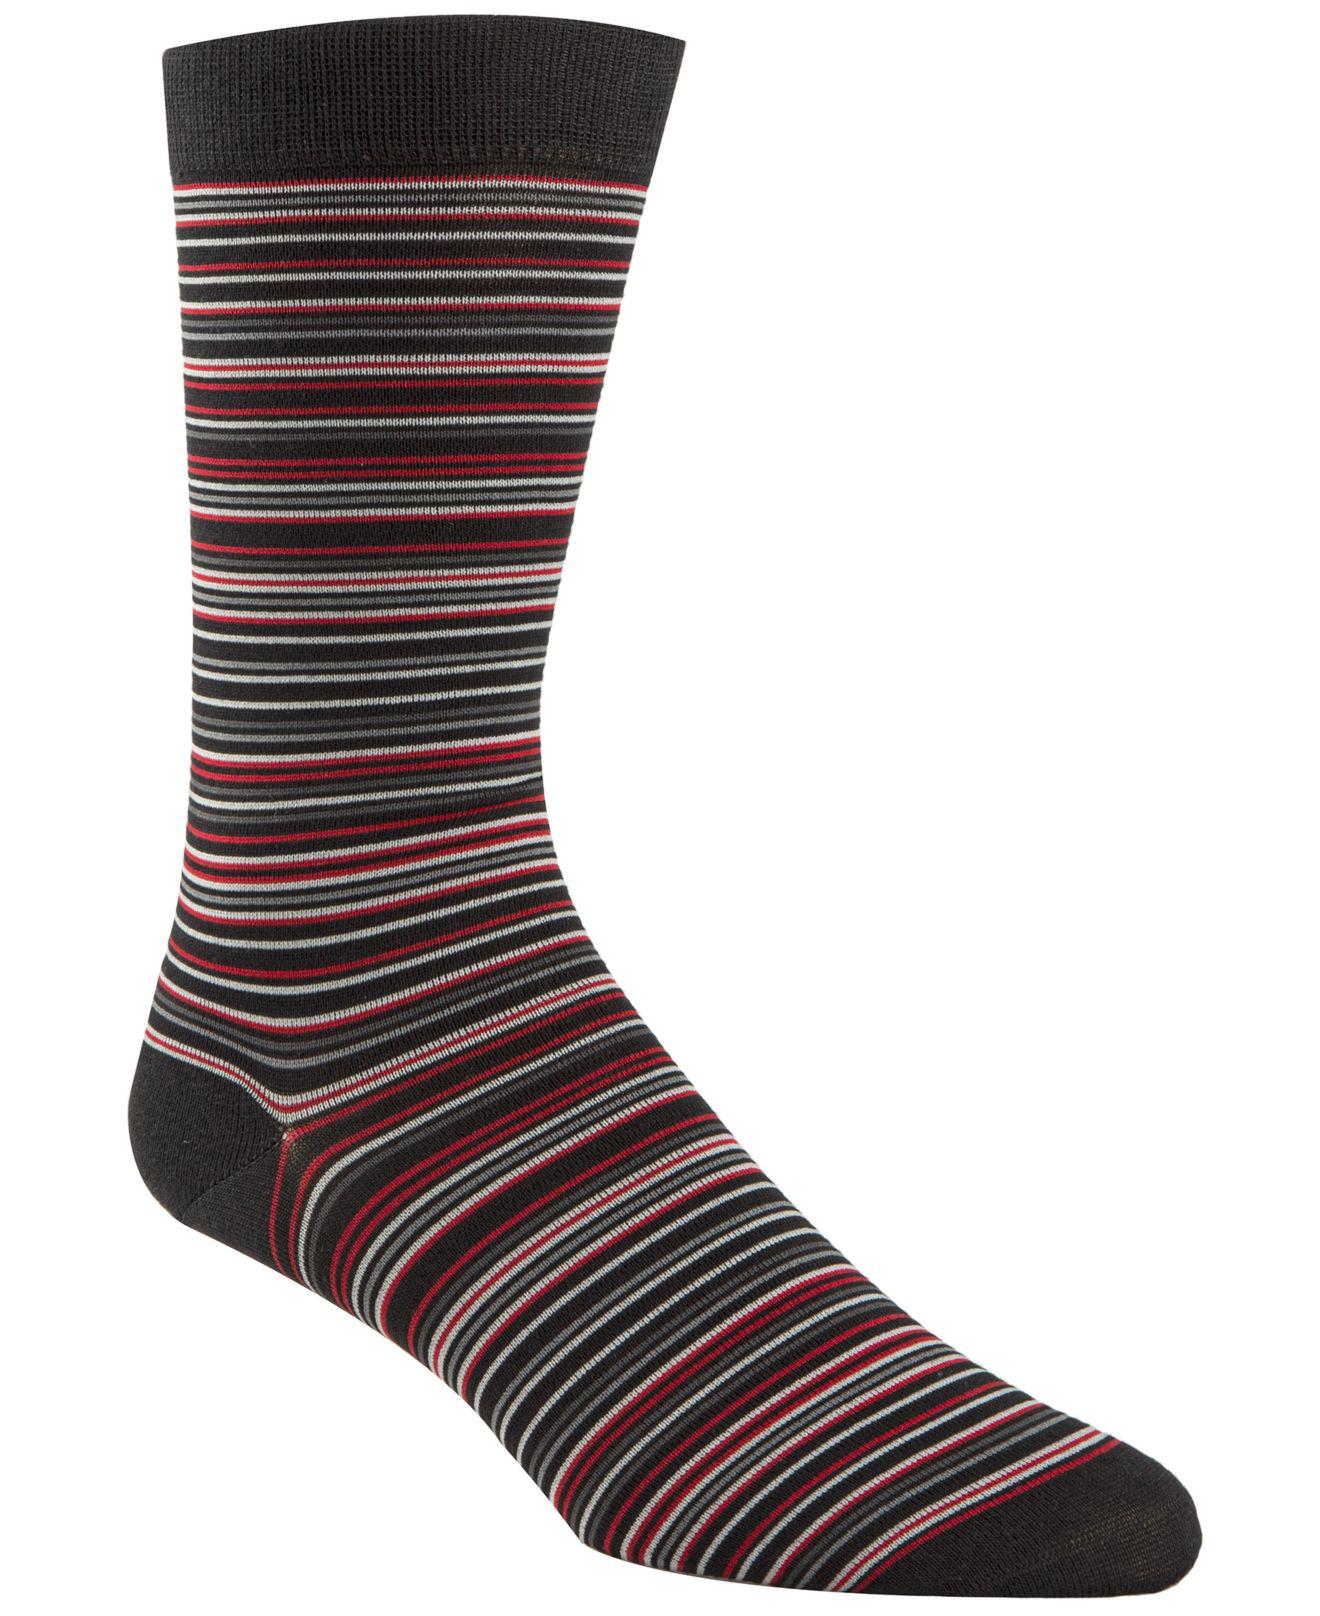 Cole Haan Synthetic Multi Stripe Crew Socks in Black for Men - Lyst